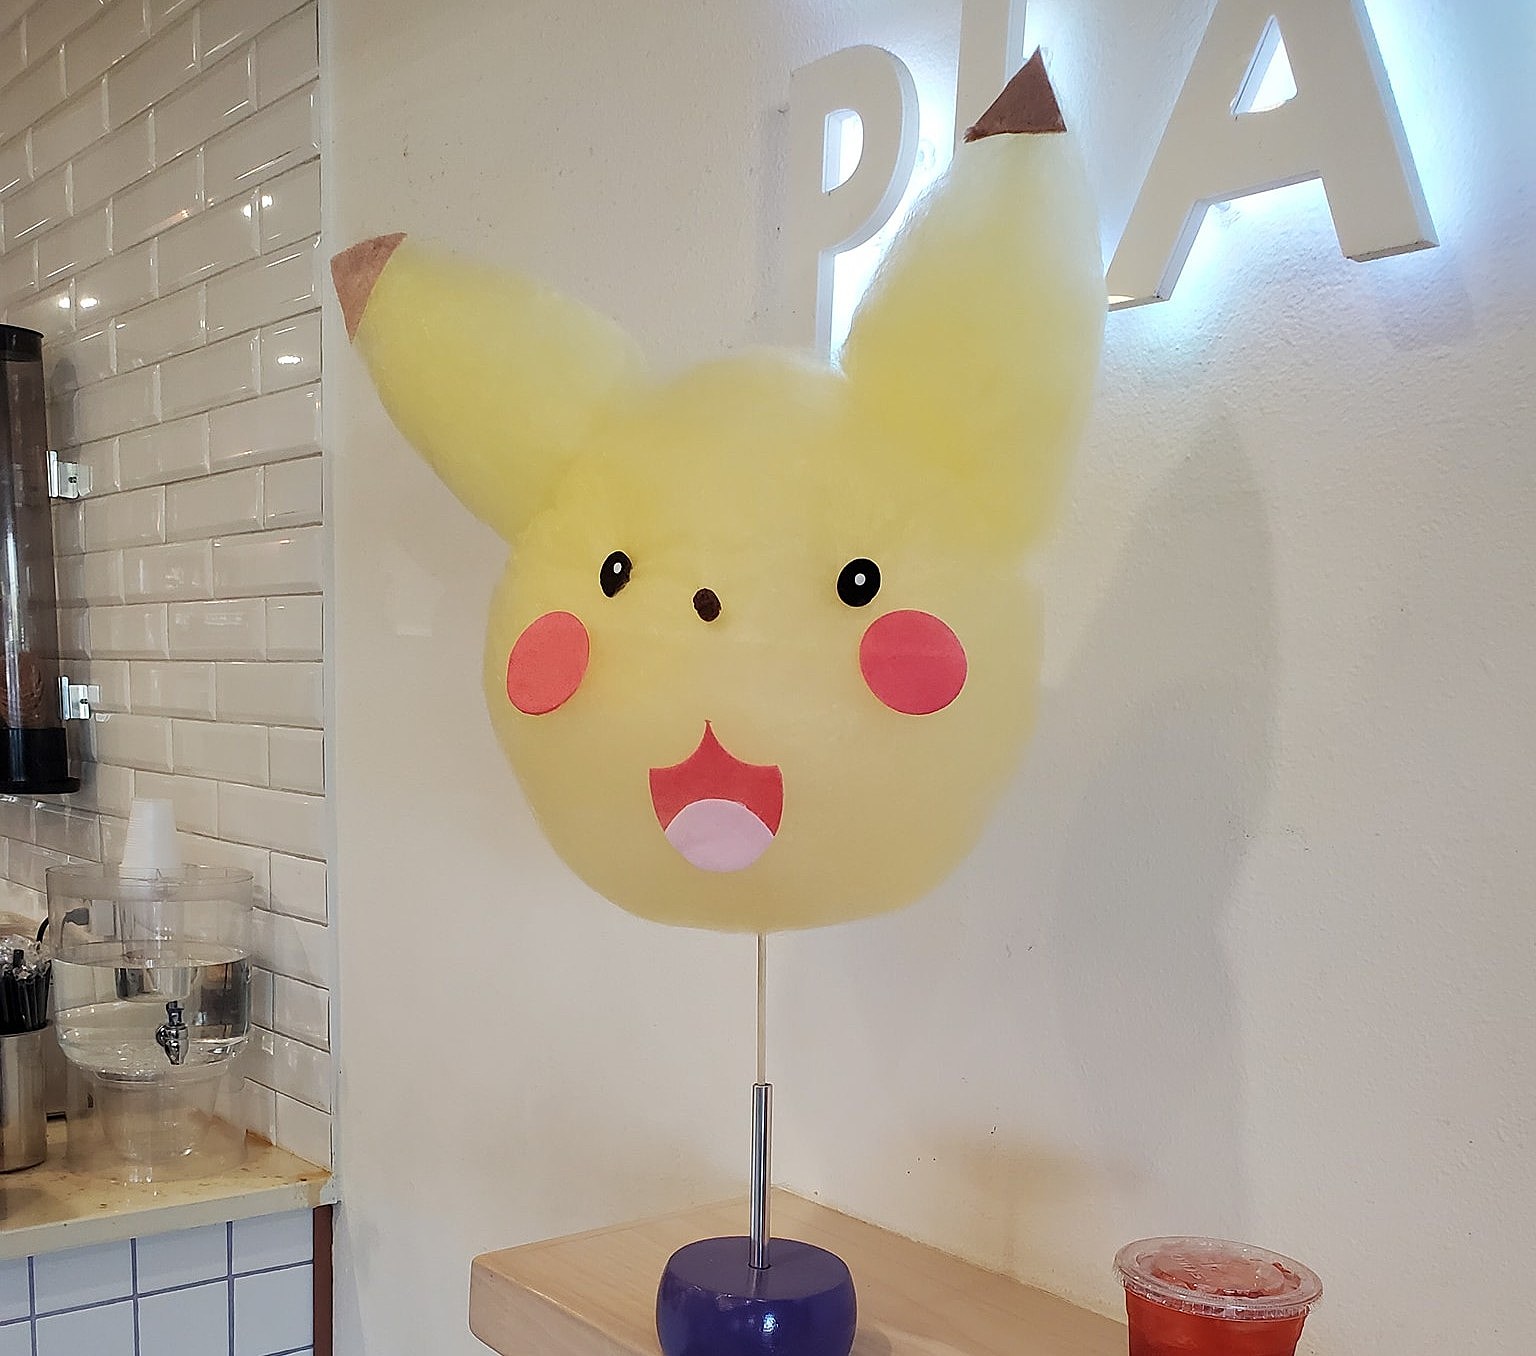 Download Pokemon Cute Stylish Pikachu Pikachu Royalty-Free Stock  Illustration Image - Pixabay